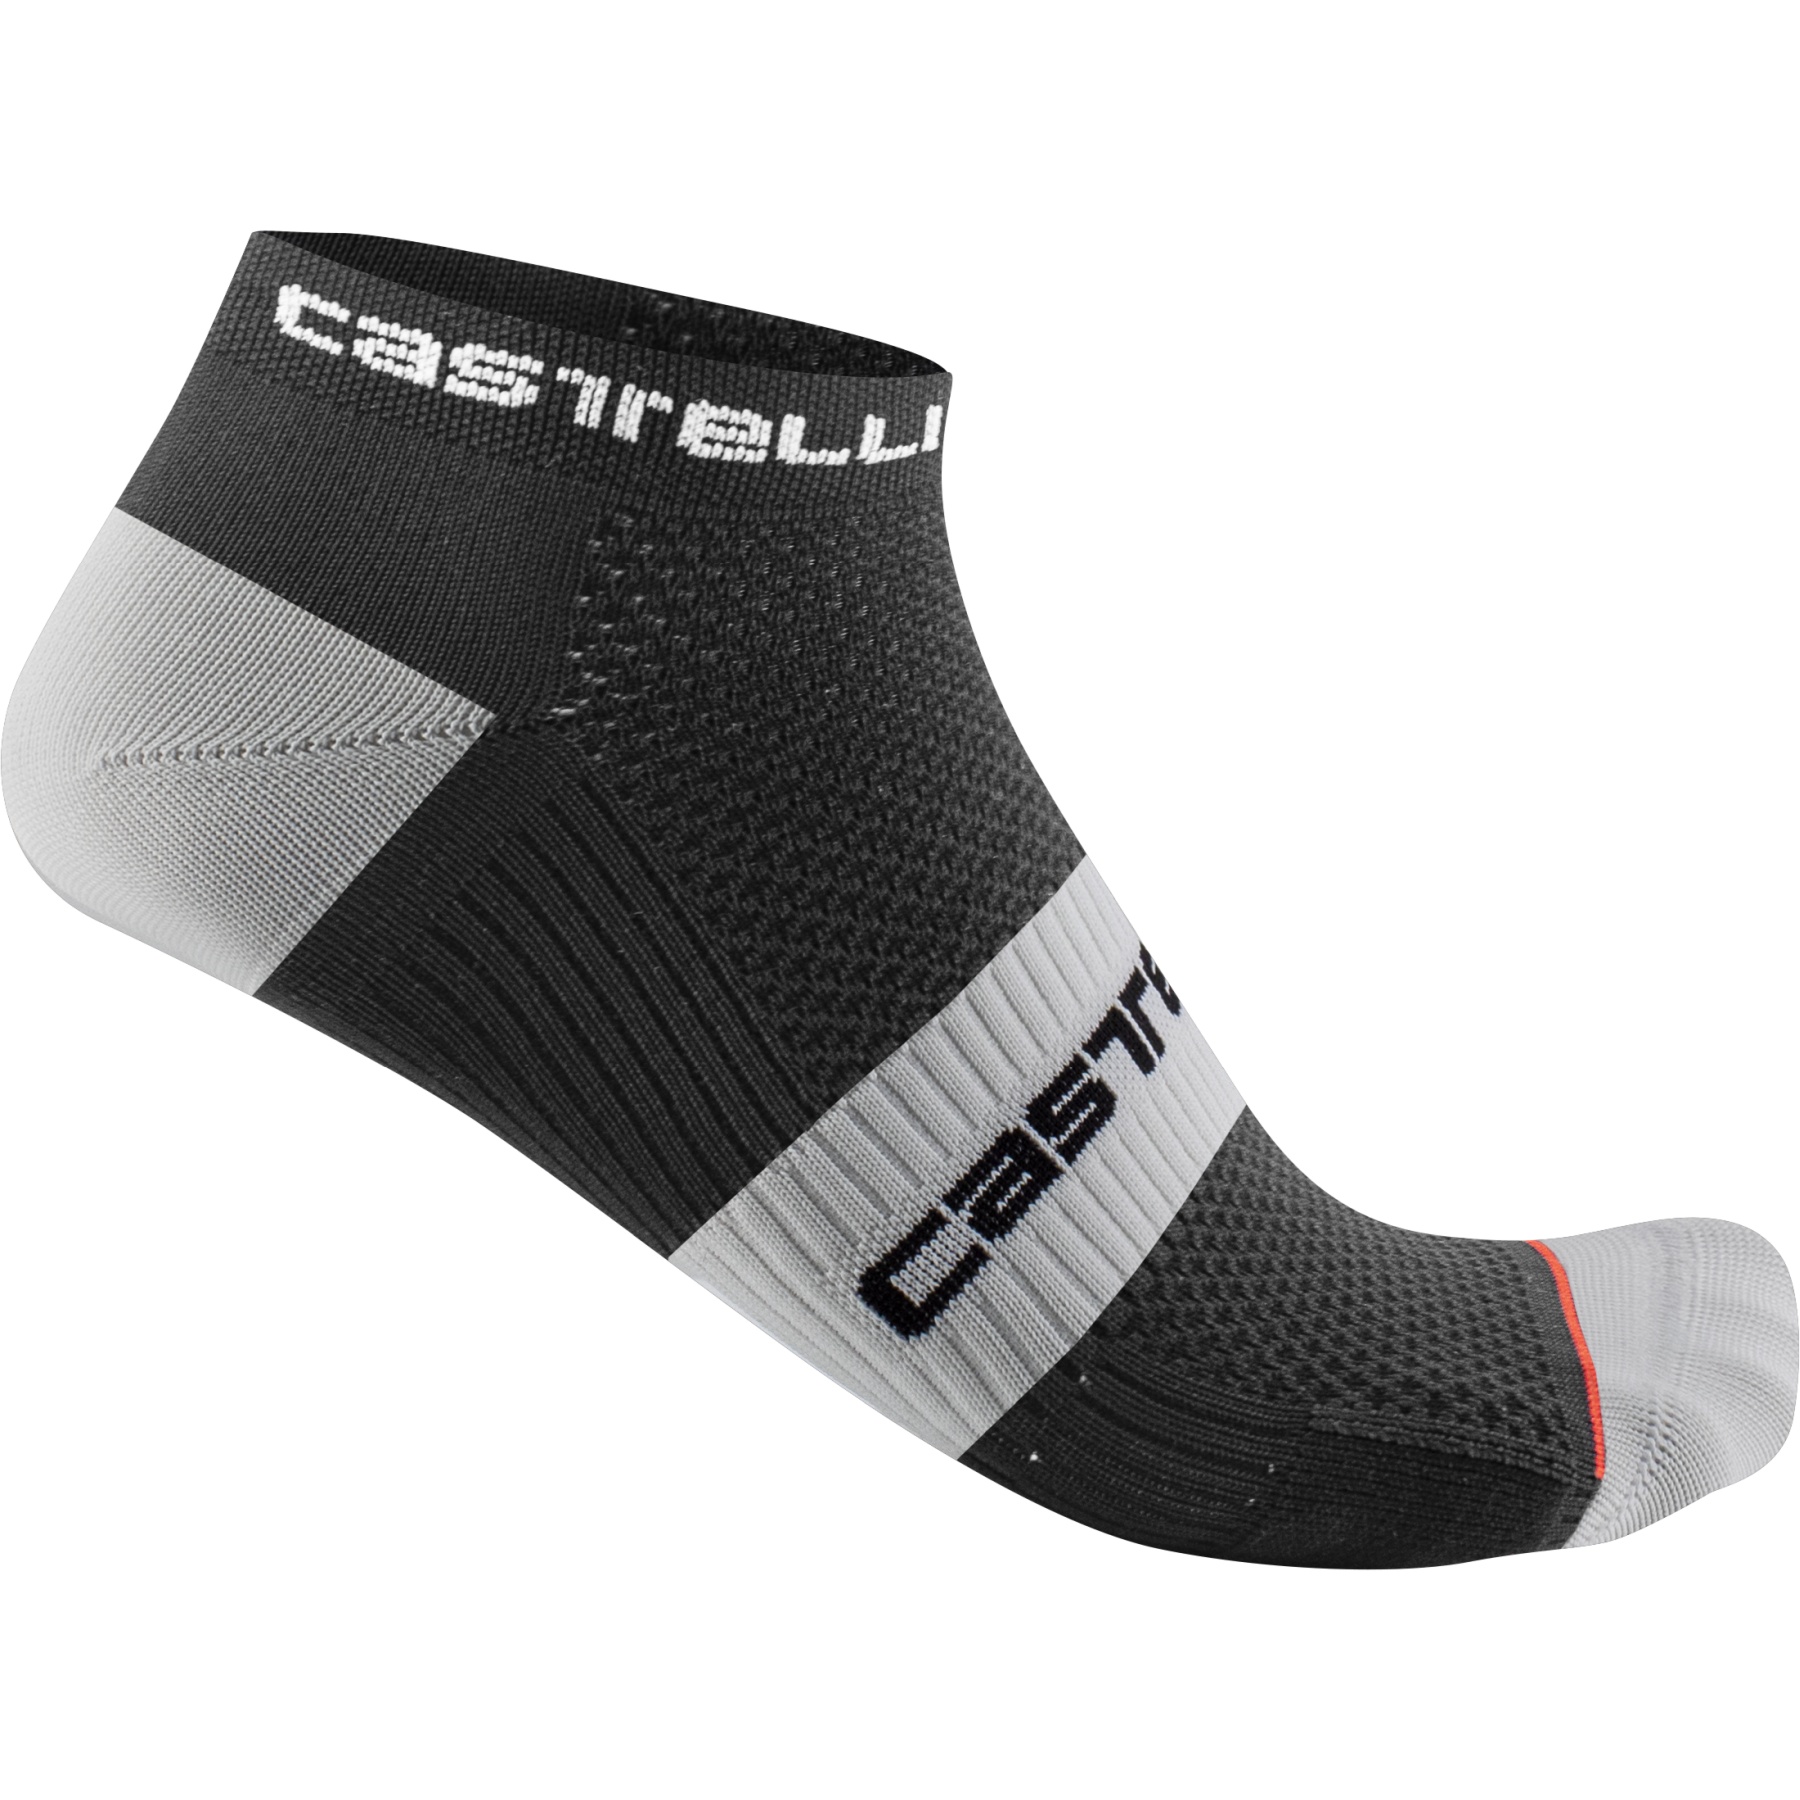 Productfoto van Castelli Lowboy 2 Sokken - zwart wit 010